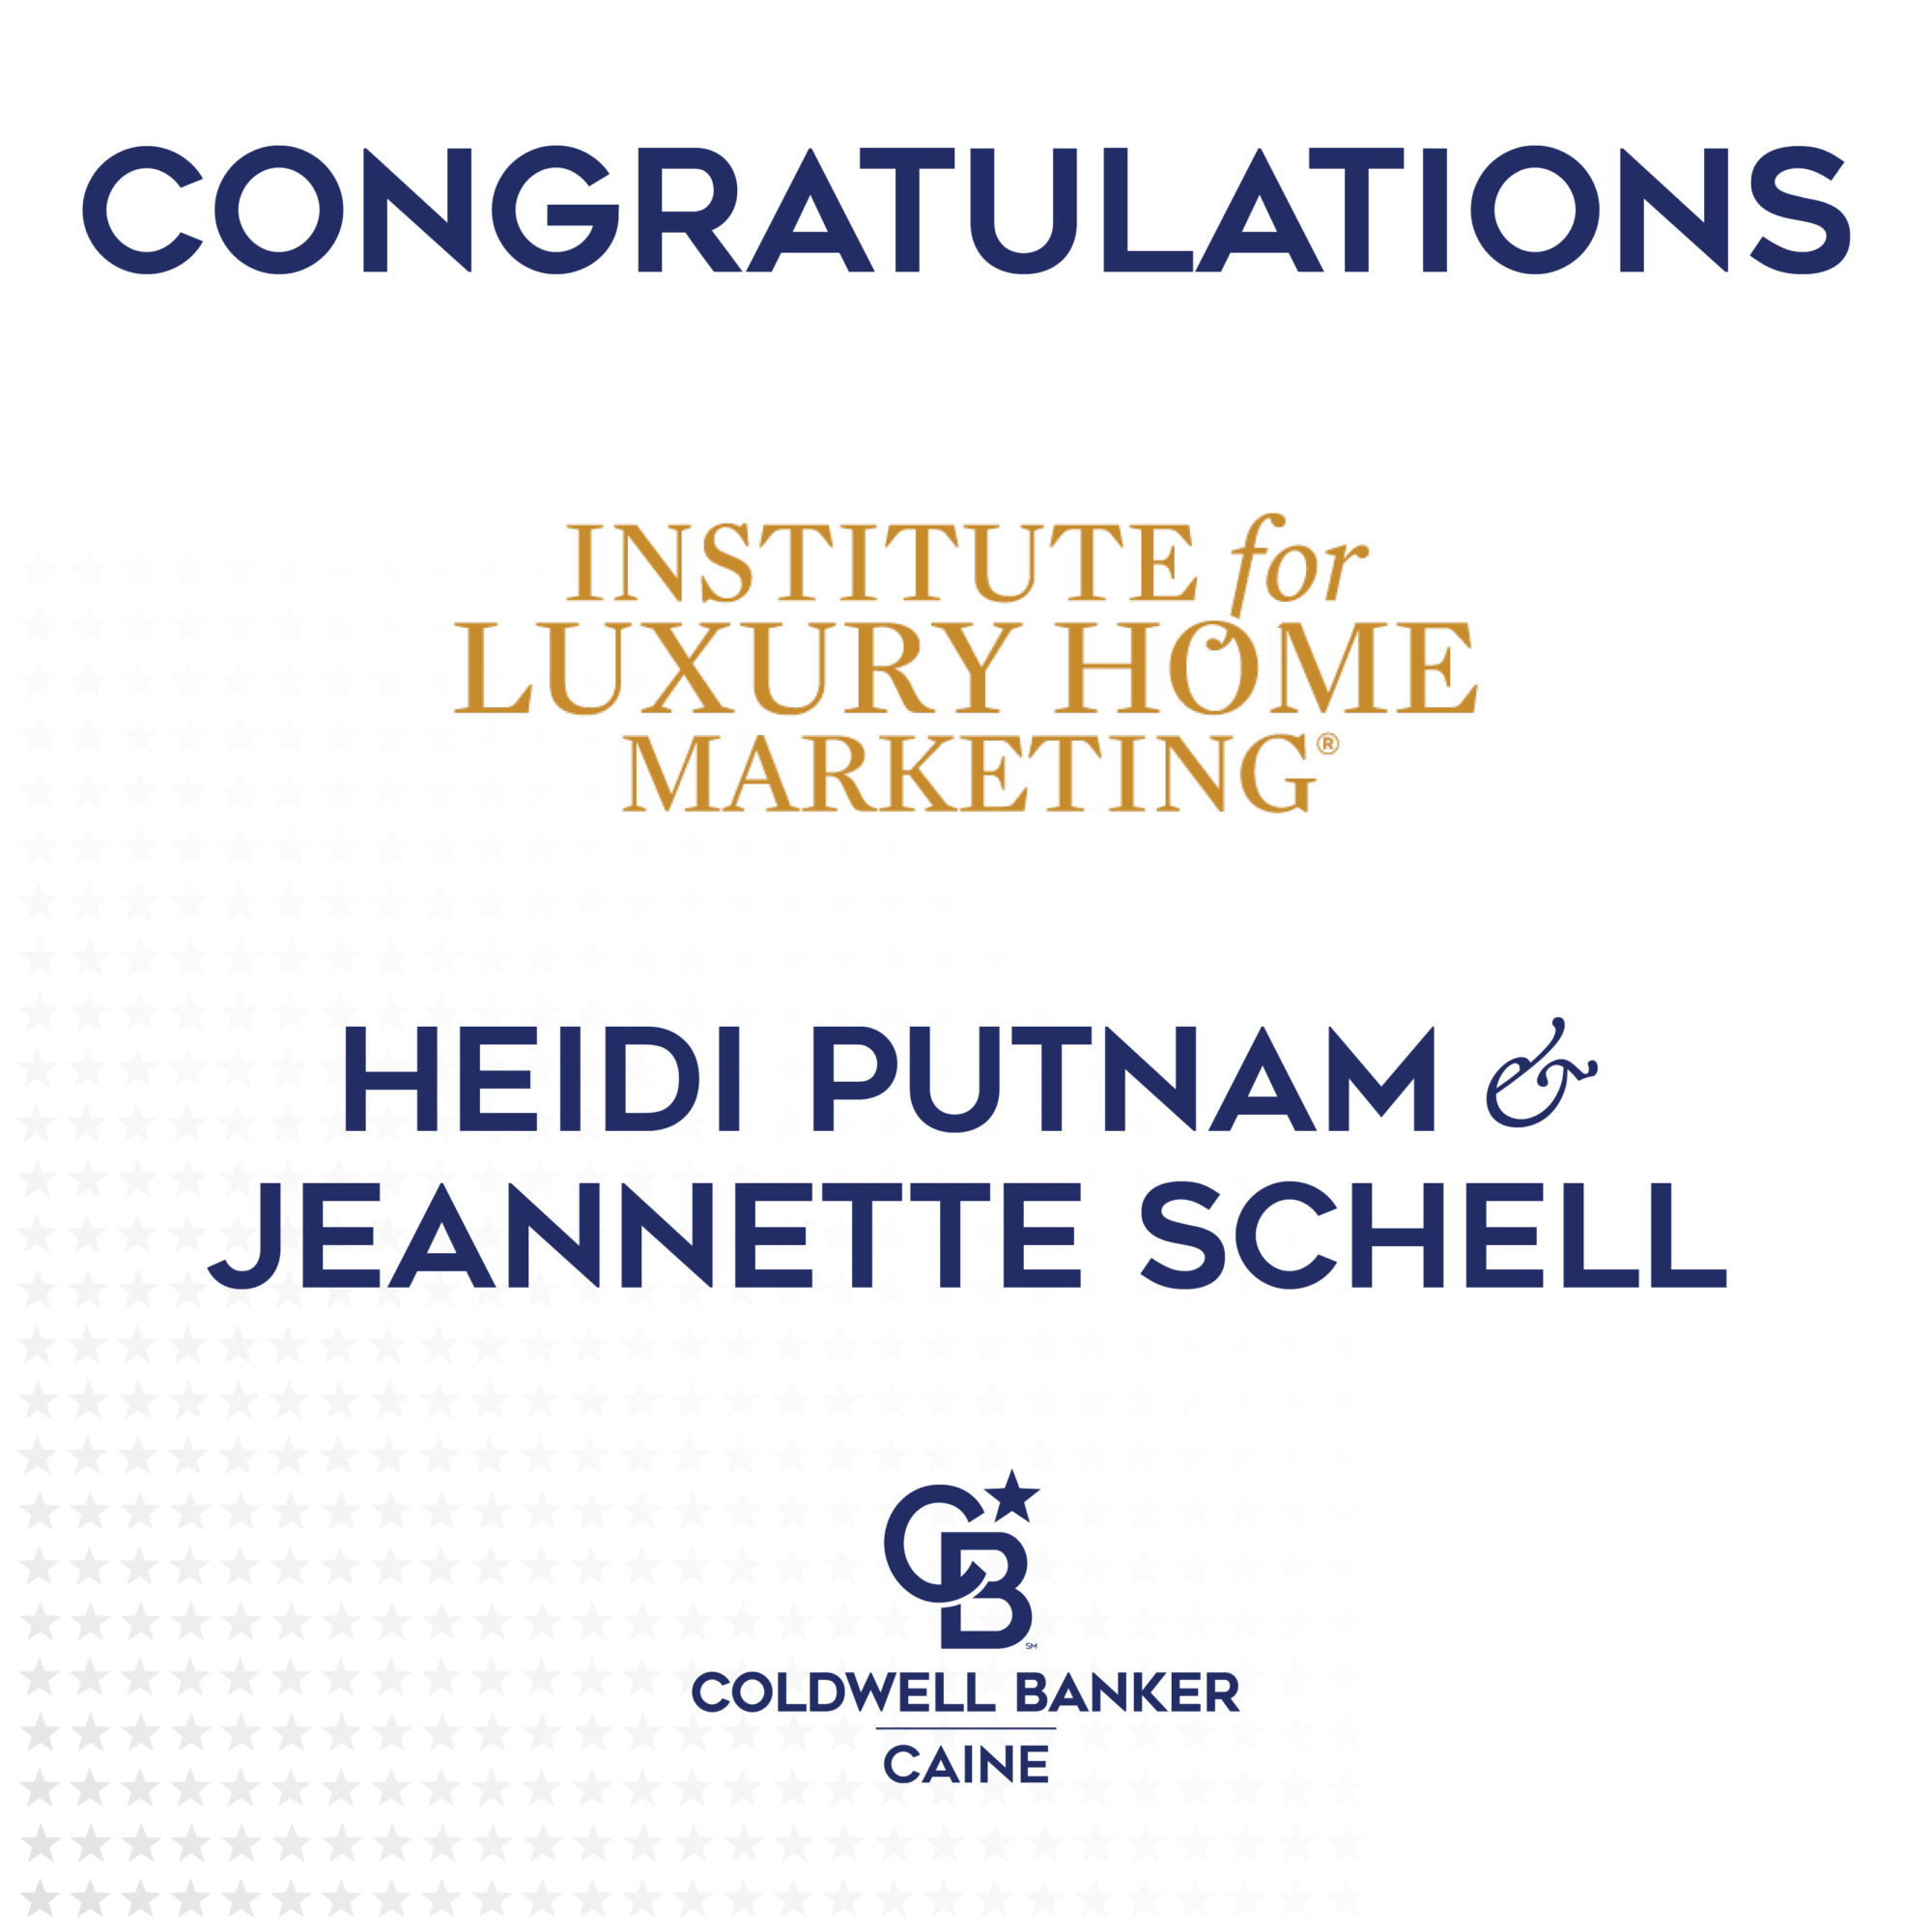 Congrats Heidi and Jeannette